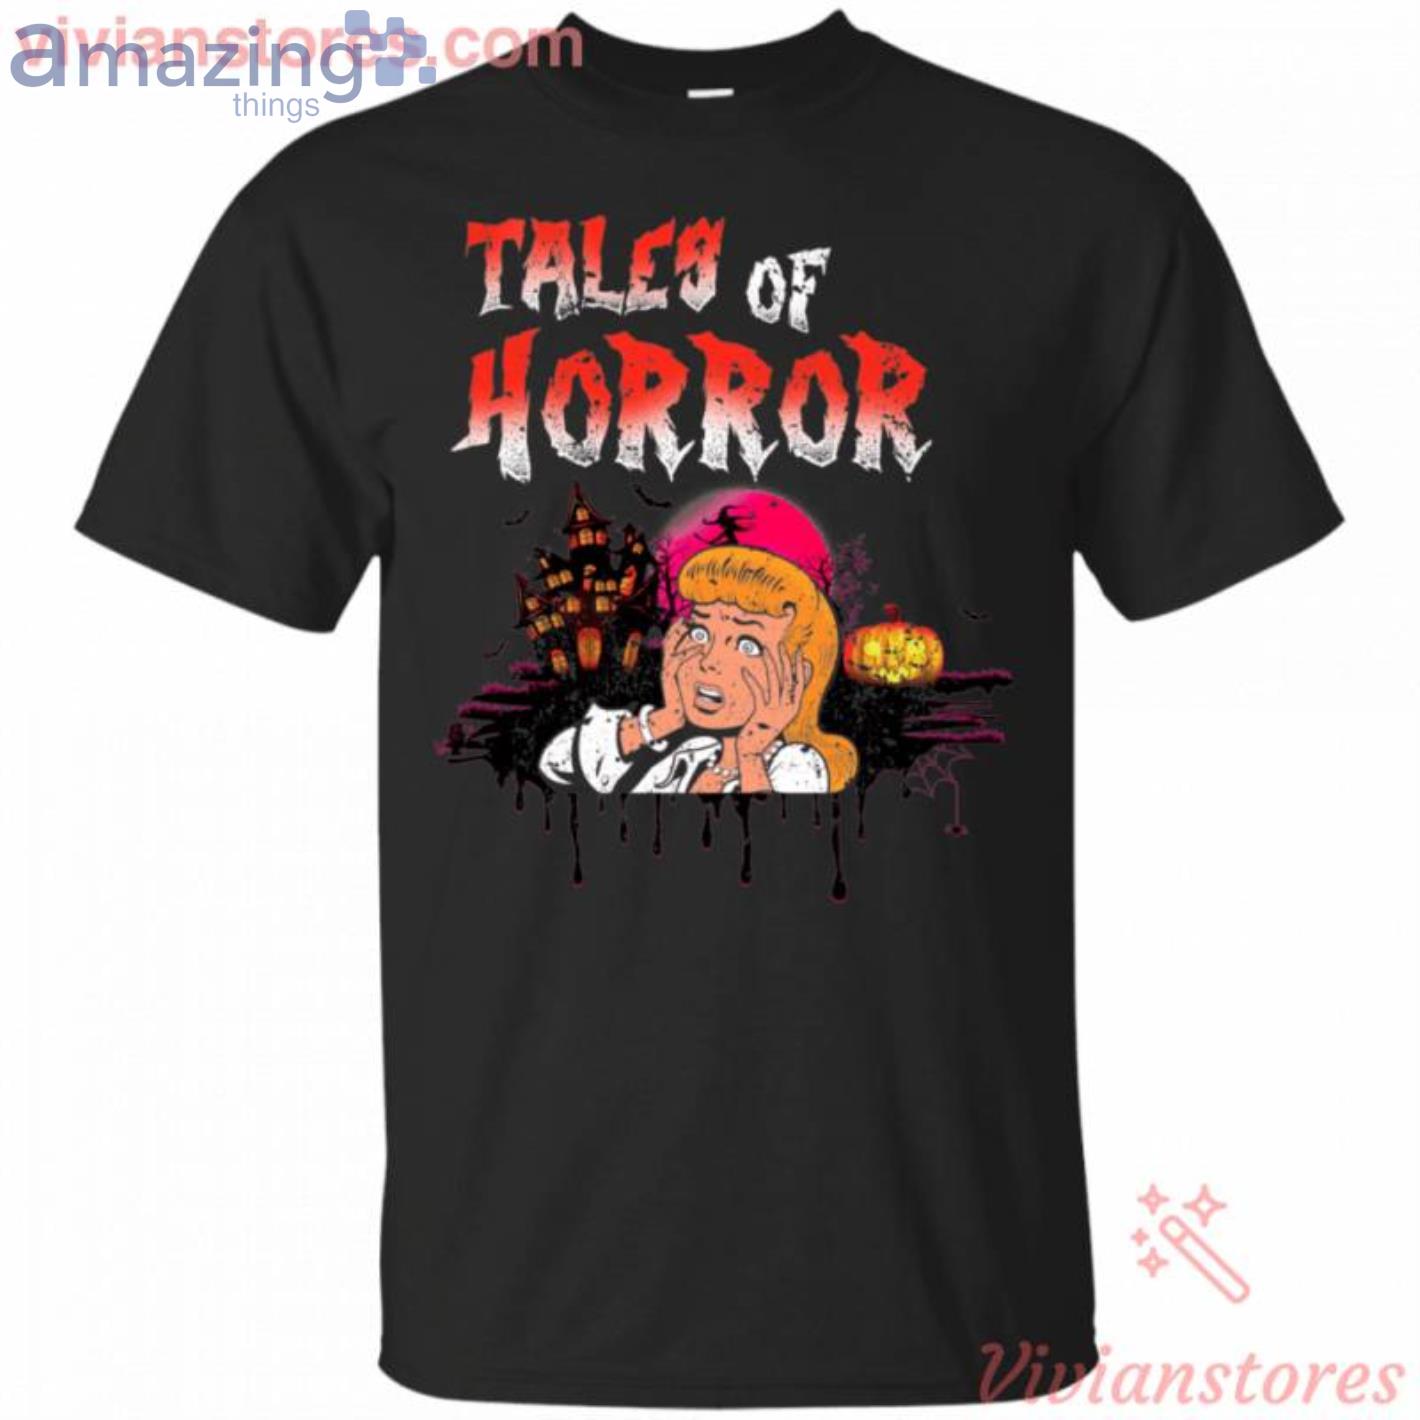 Vintage Horror Movie Halloween T-Shirt Product Photo 1